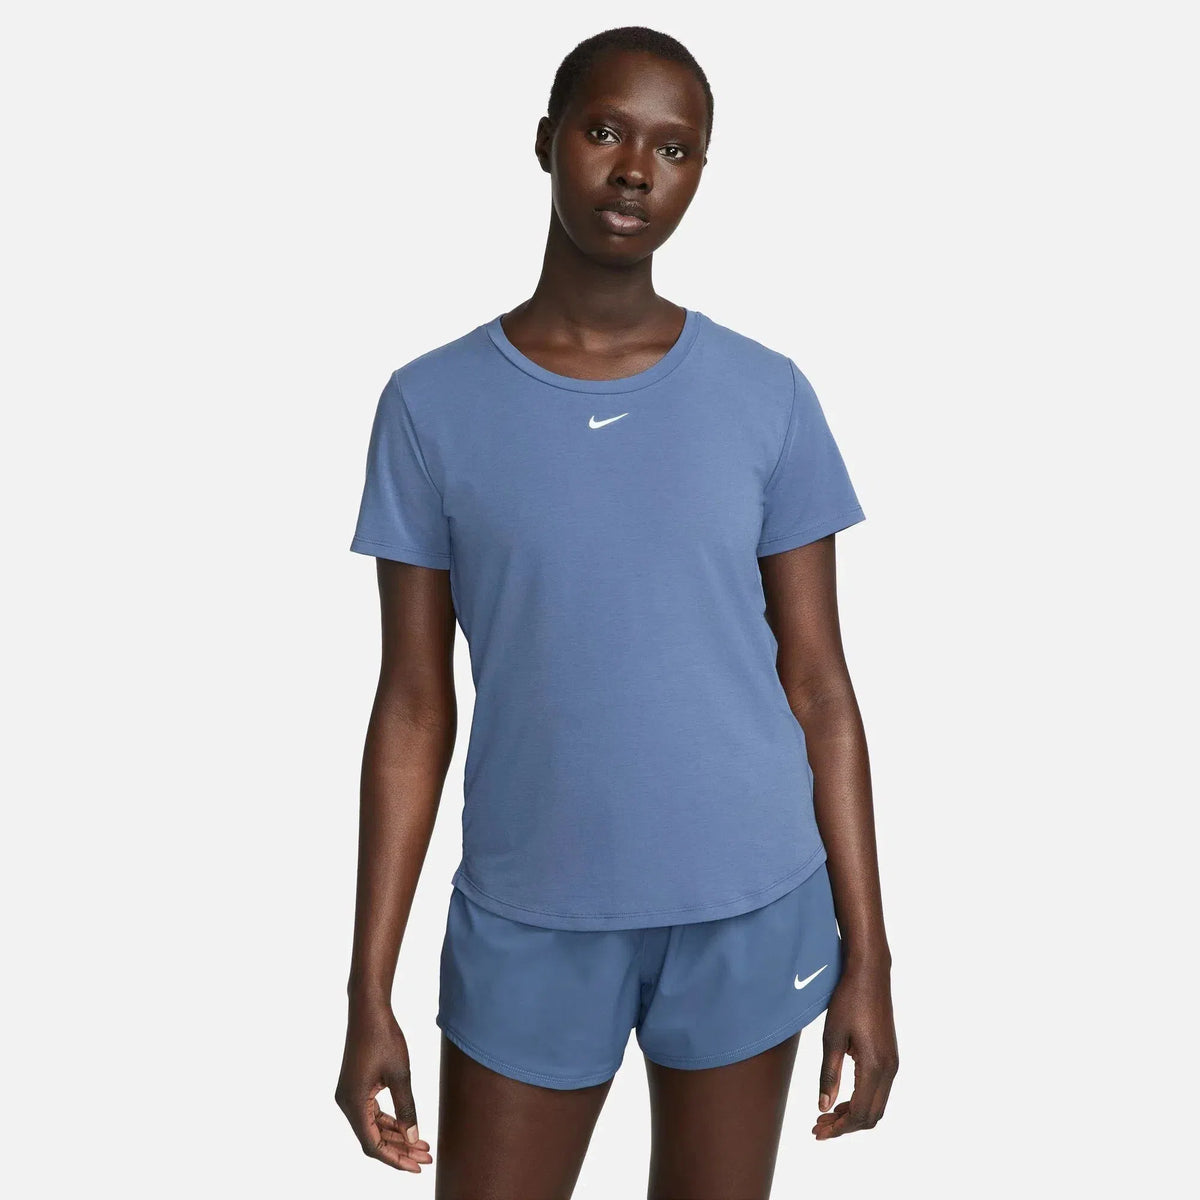 Nike Dri-fit One Luxe azul camisetas tirantes fitness mujer